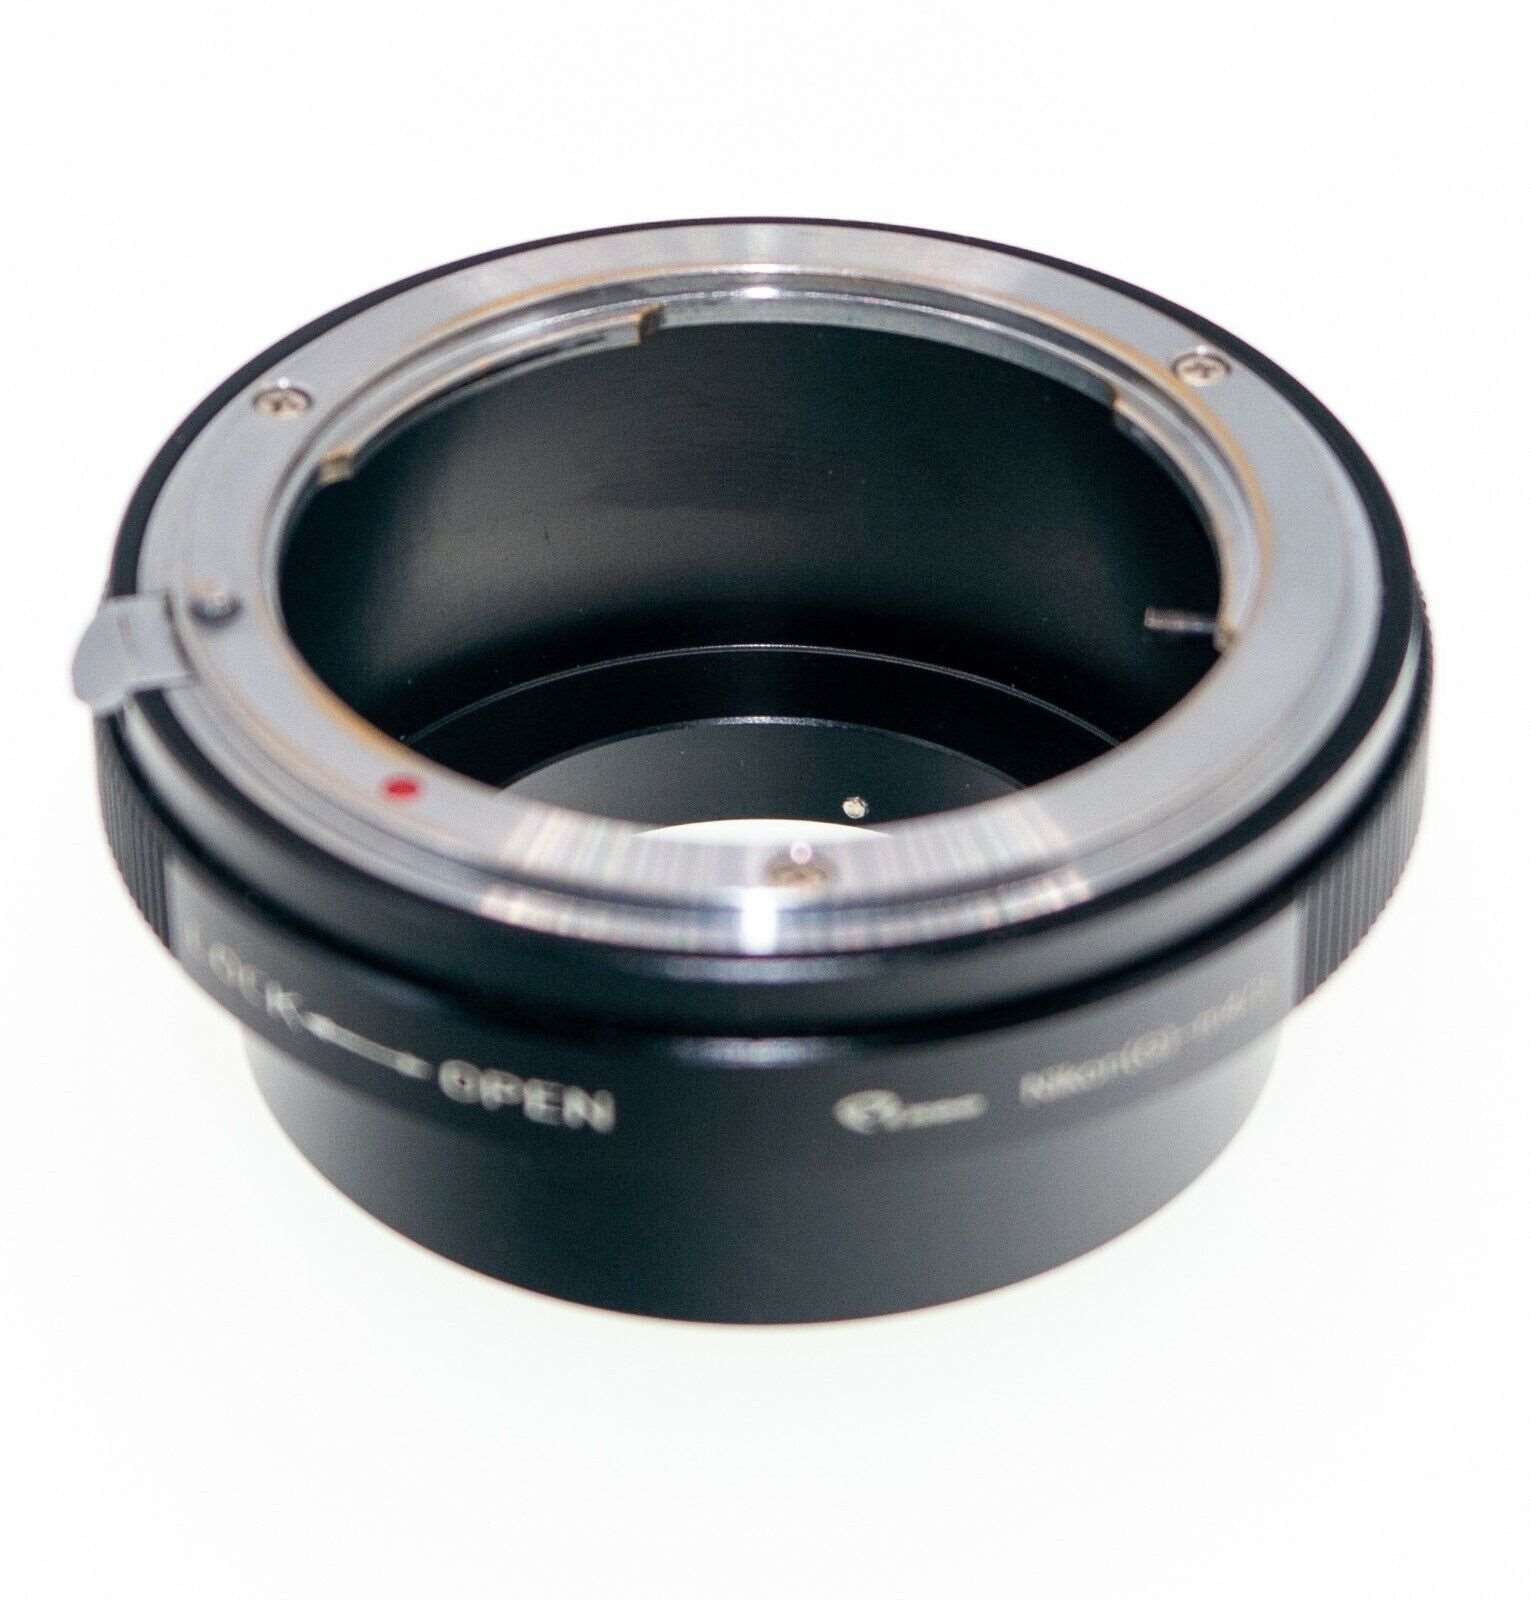 Camera Lens 35mm & Digital  Adaptor from Pixco - Nikon (G) to m4/3 Adapter